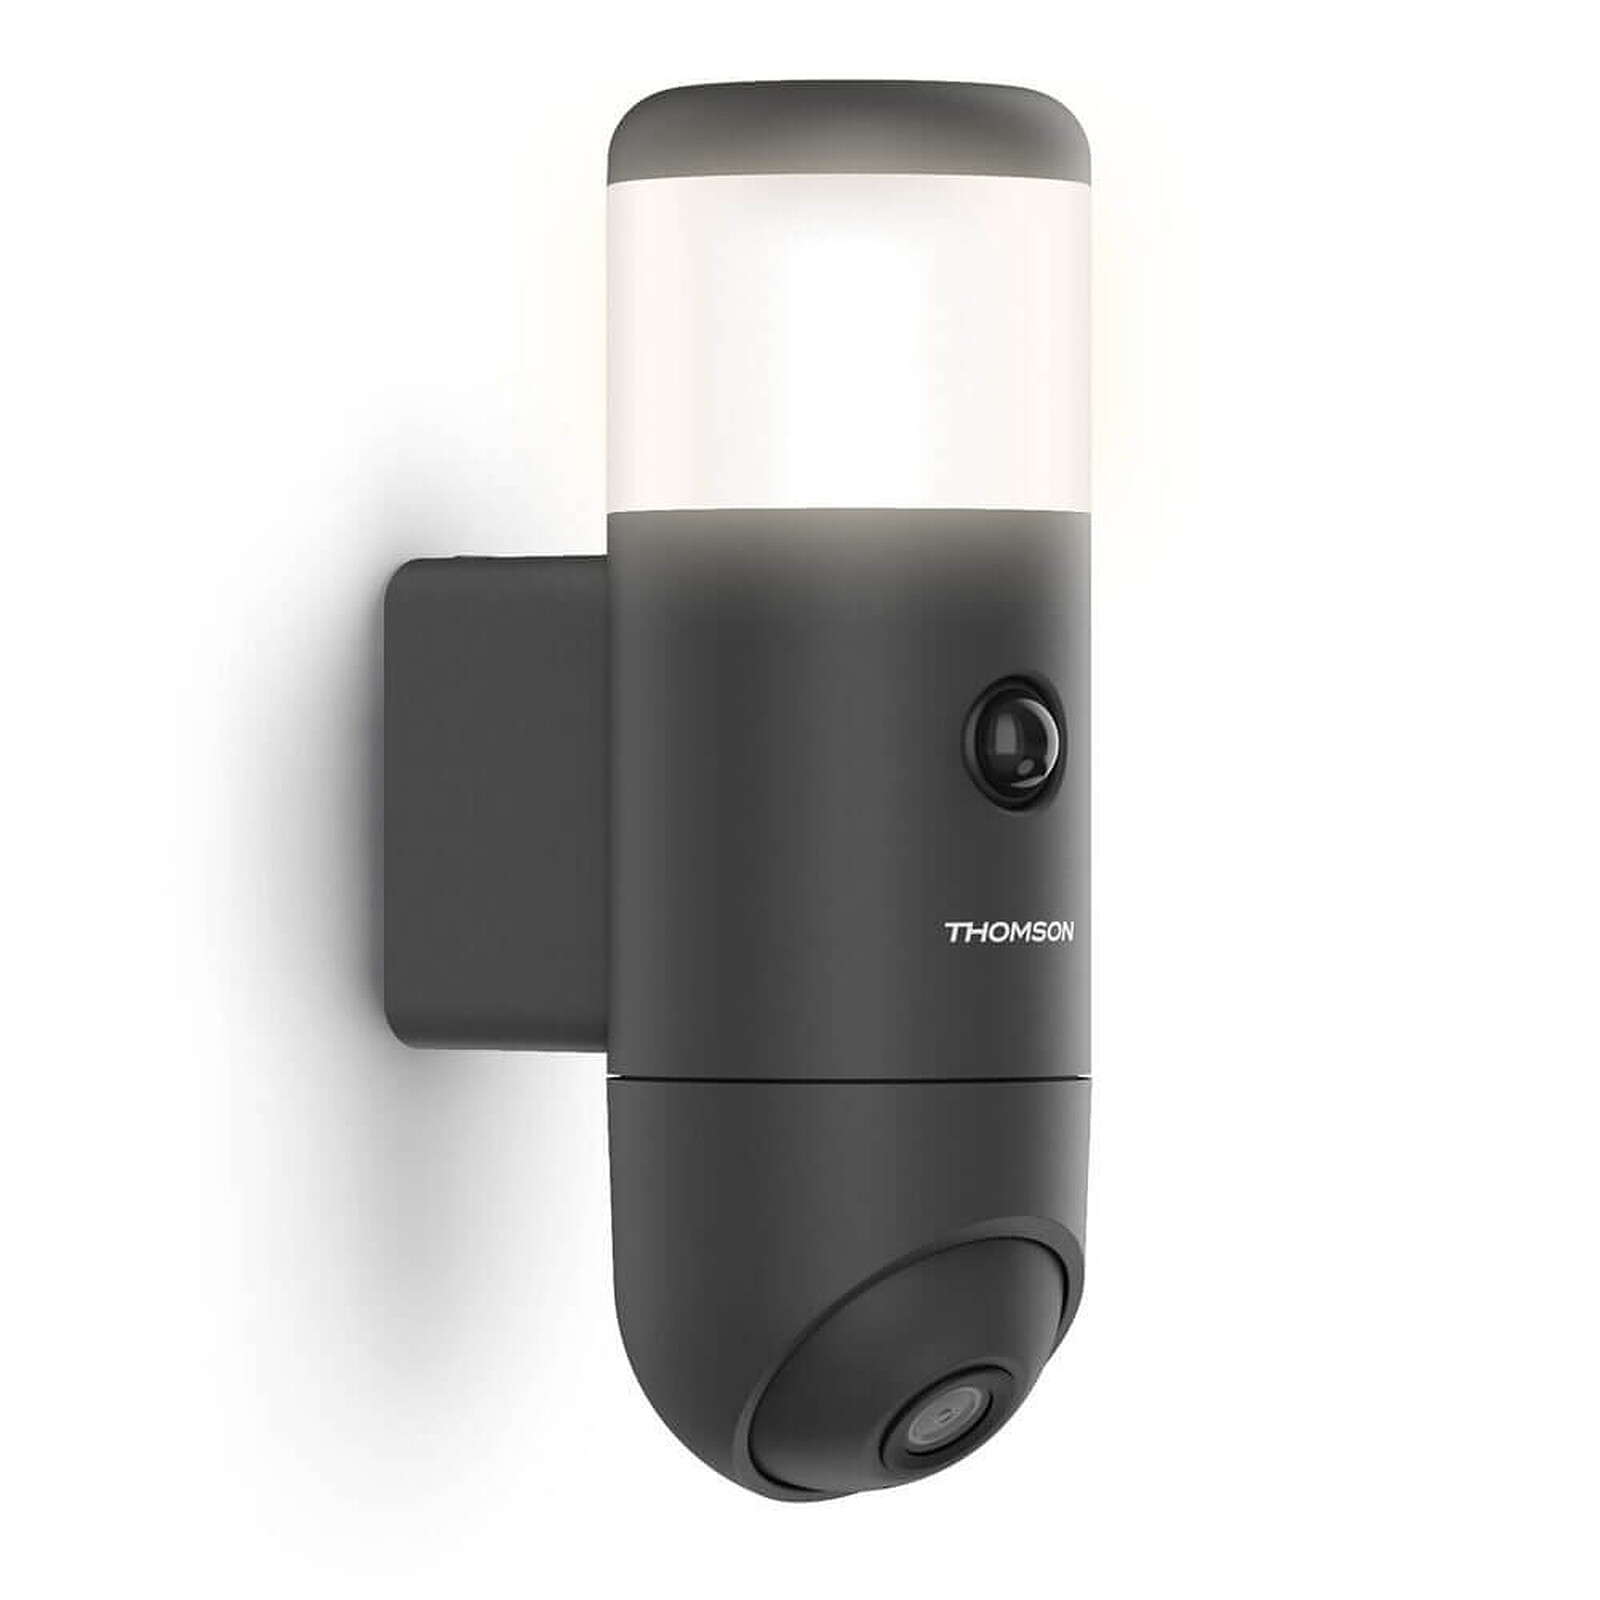 Thomson - Caméra motorisée extérieure avec lampe intégrée - Caméra